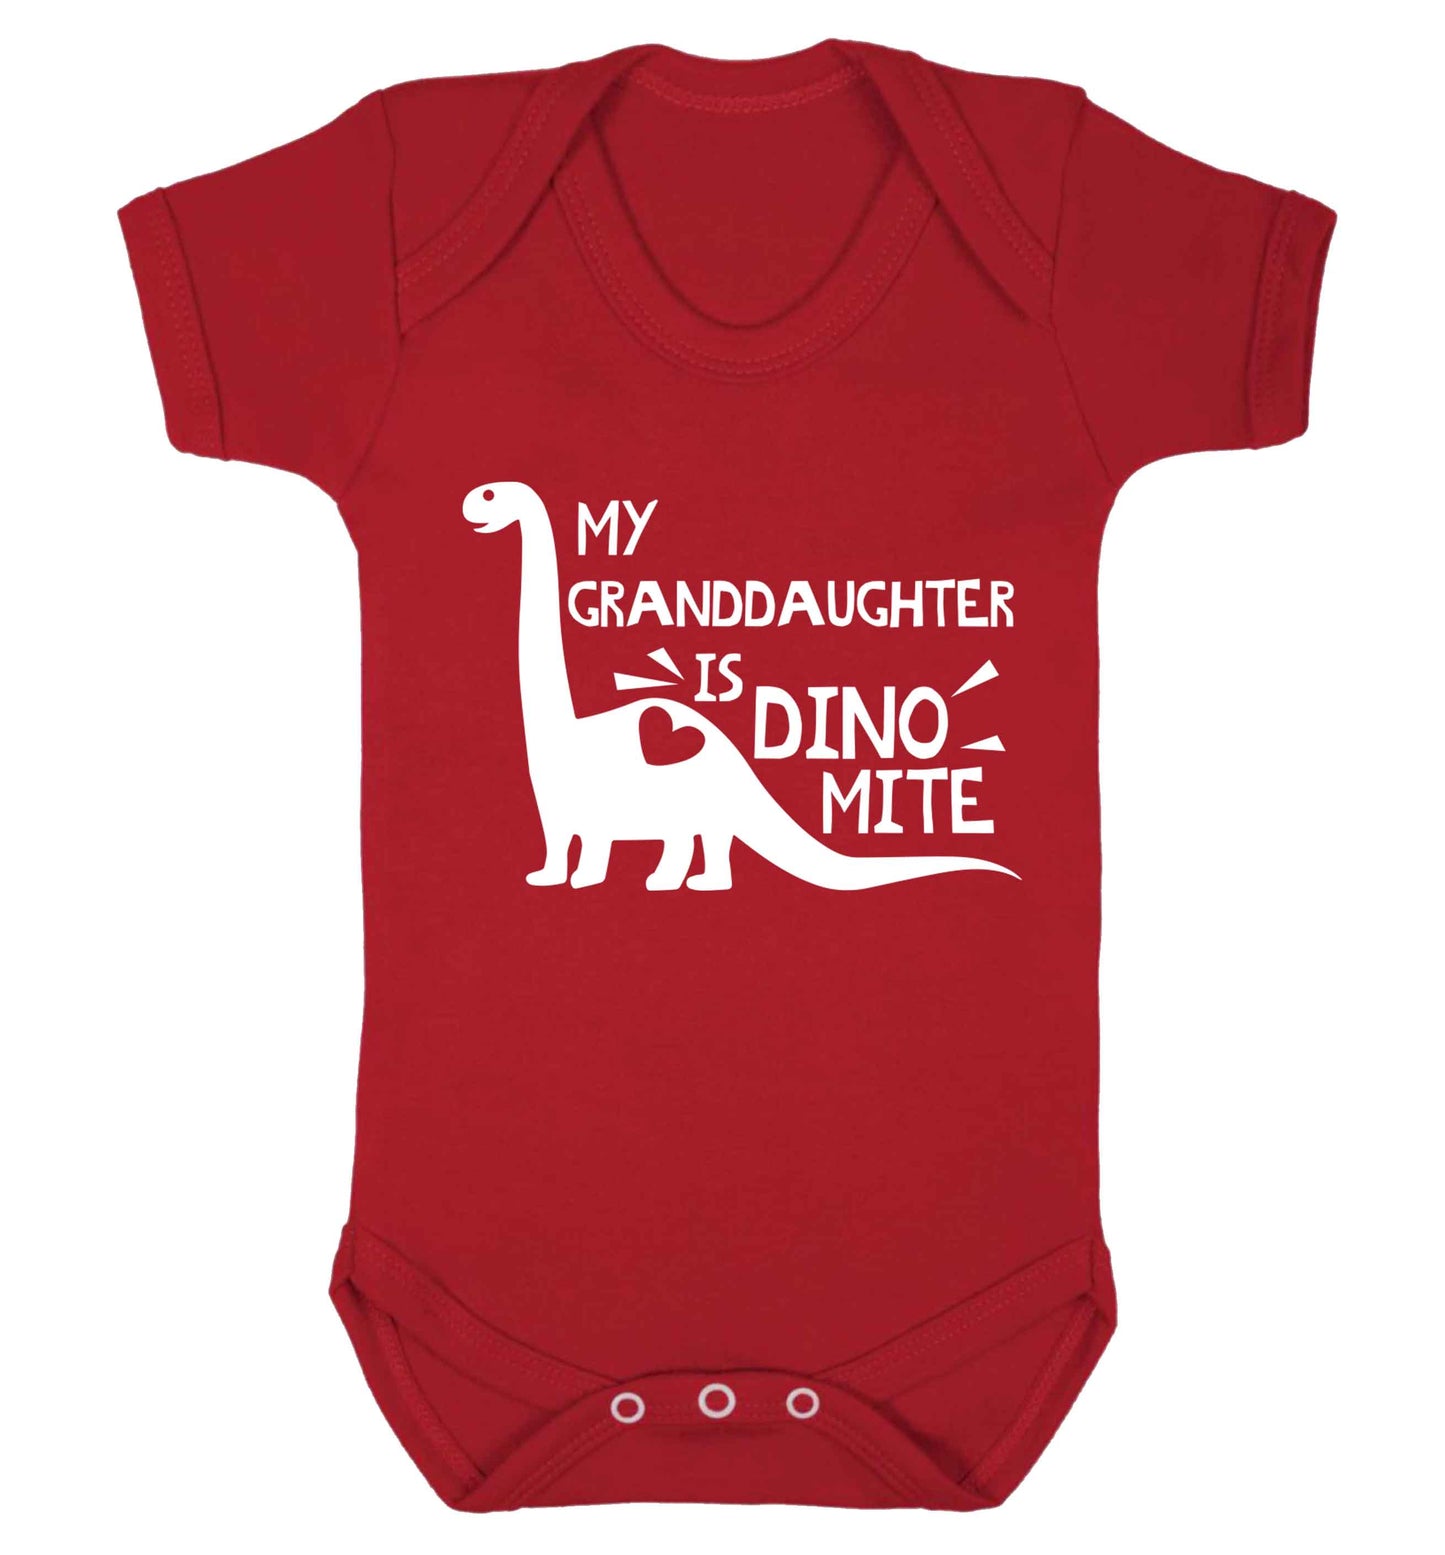 My granddaughter is dinomite! Baby Vest red 18-24 months